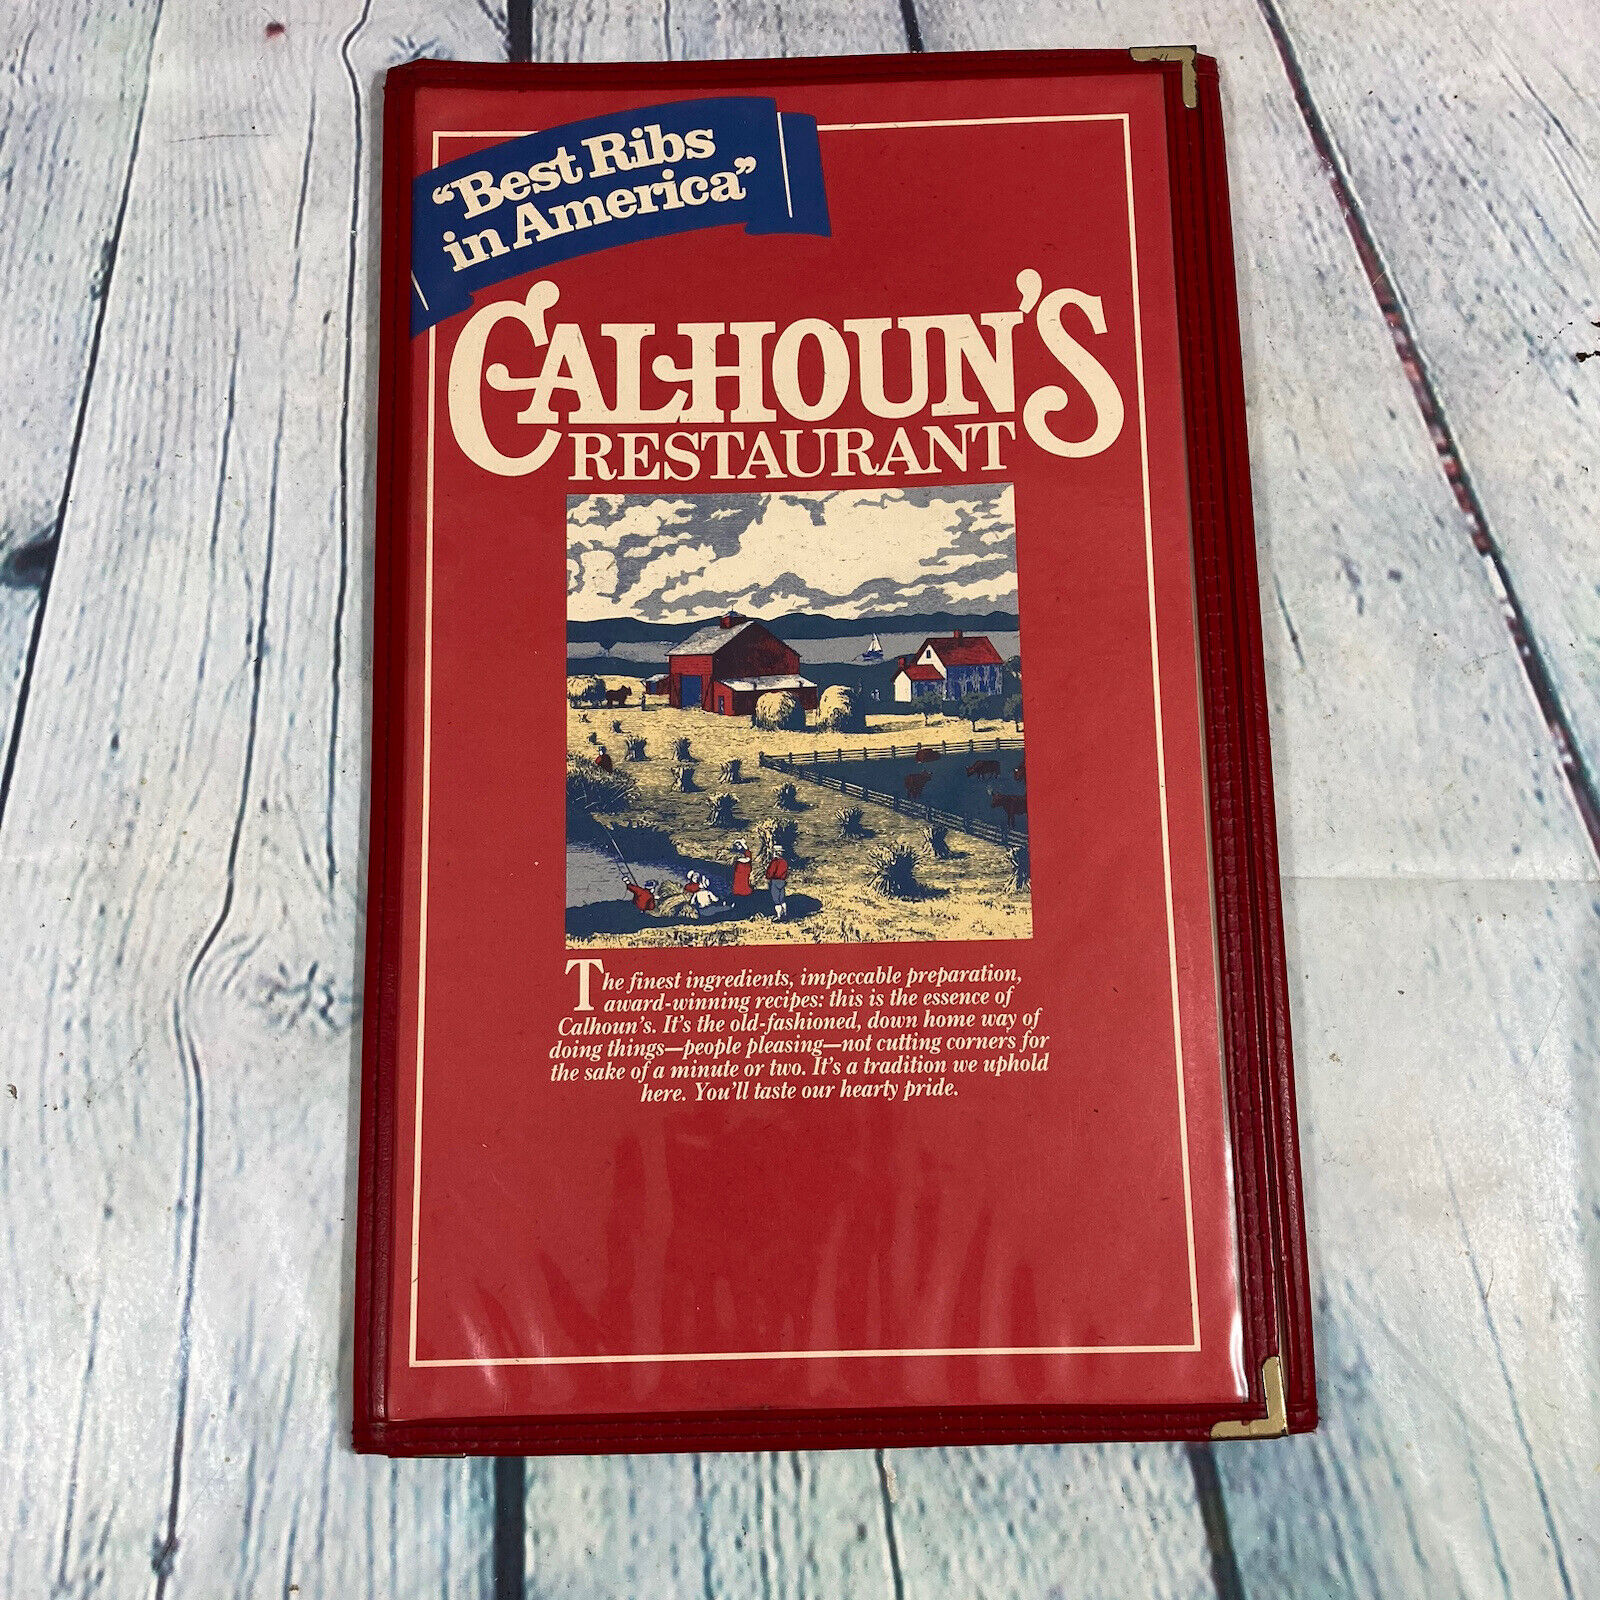 Vintage Calhoun's Best Ribs in America Restaurant Menu with Plastic Holder